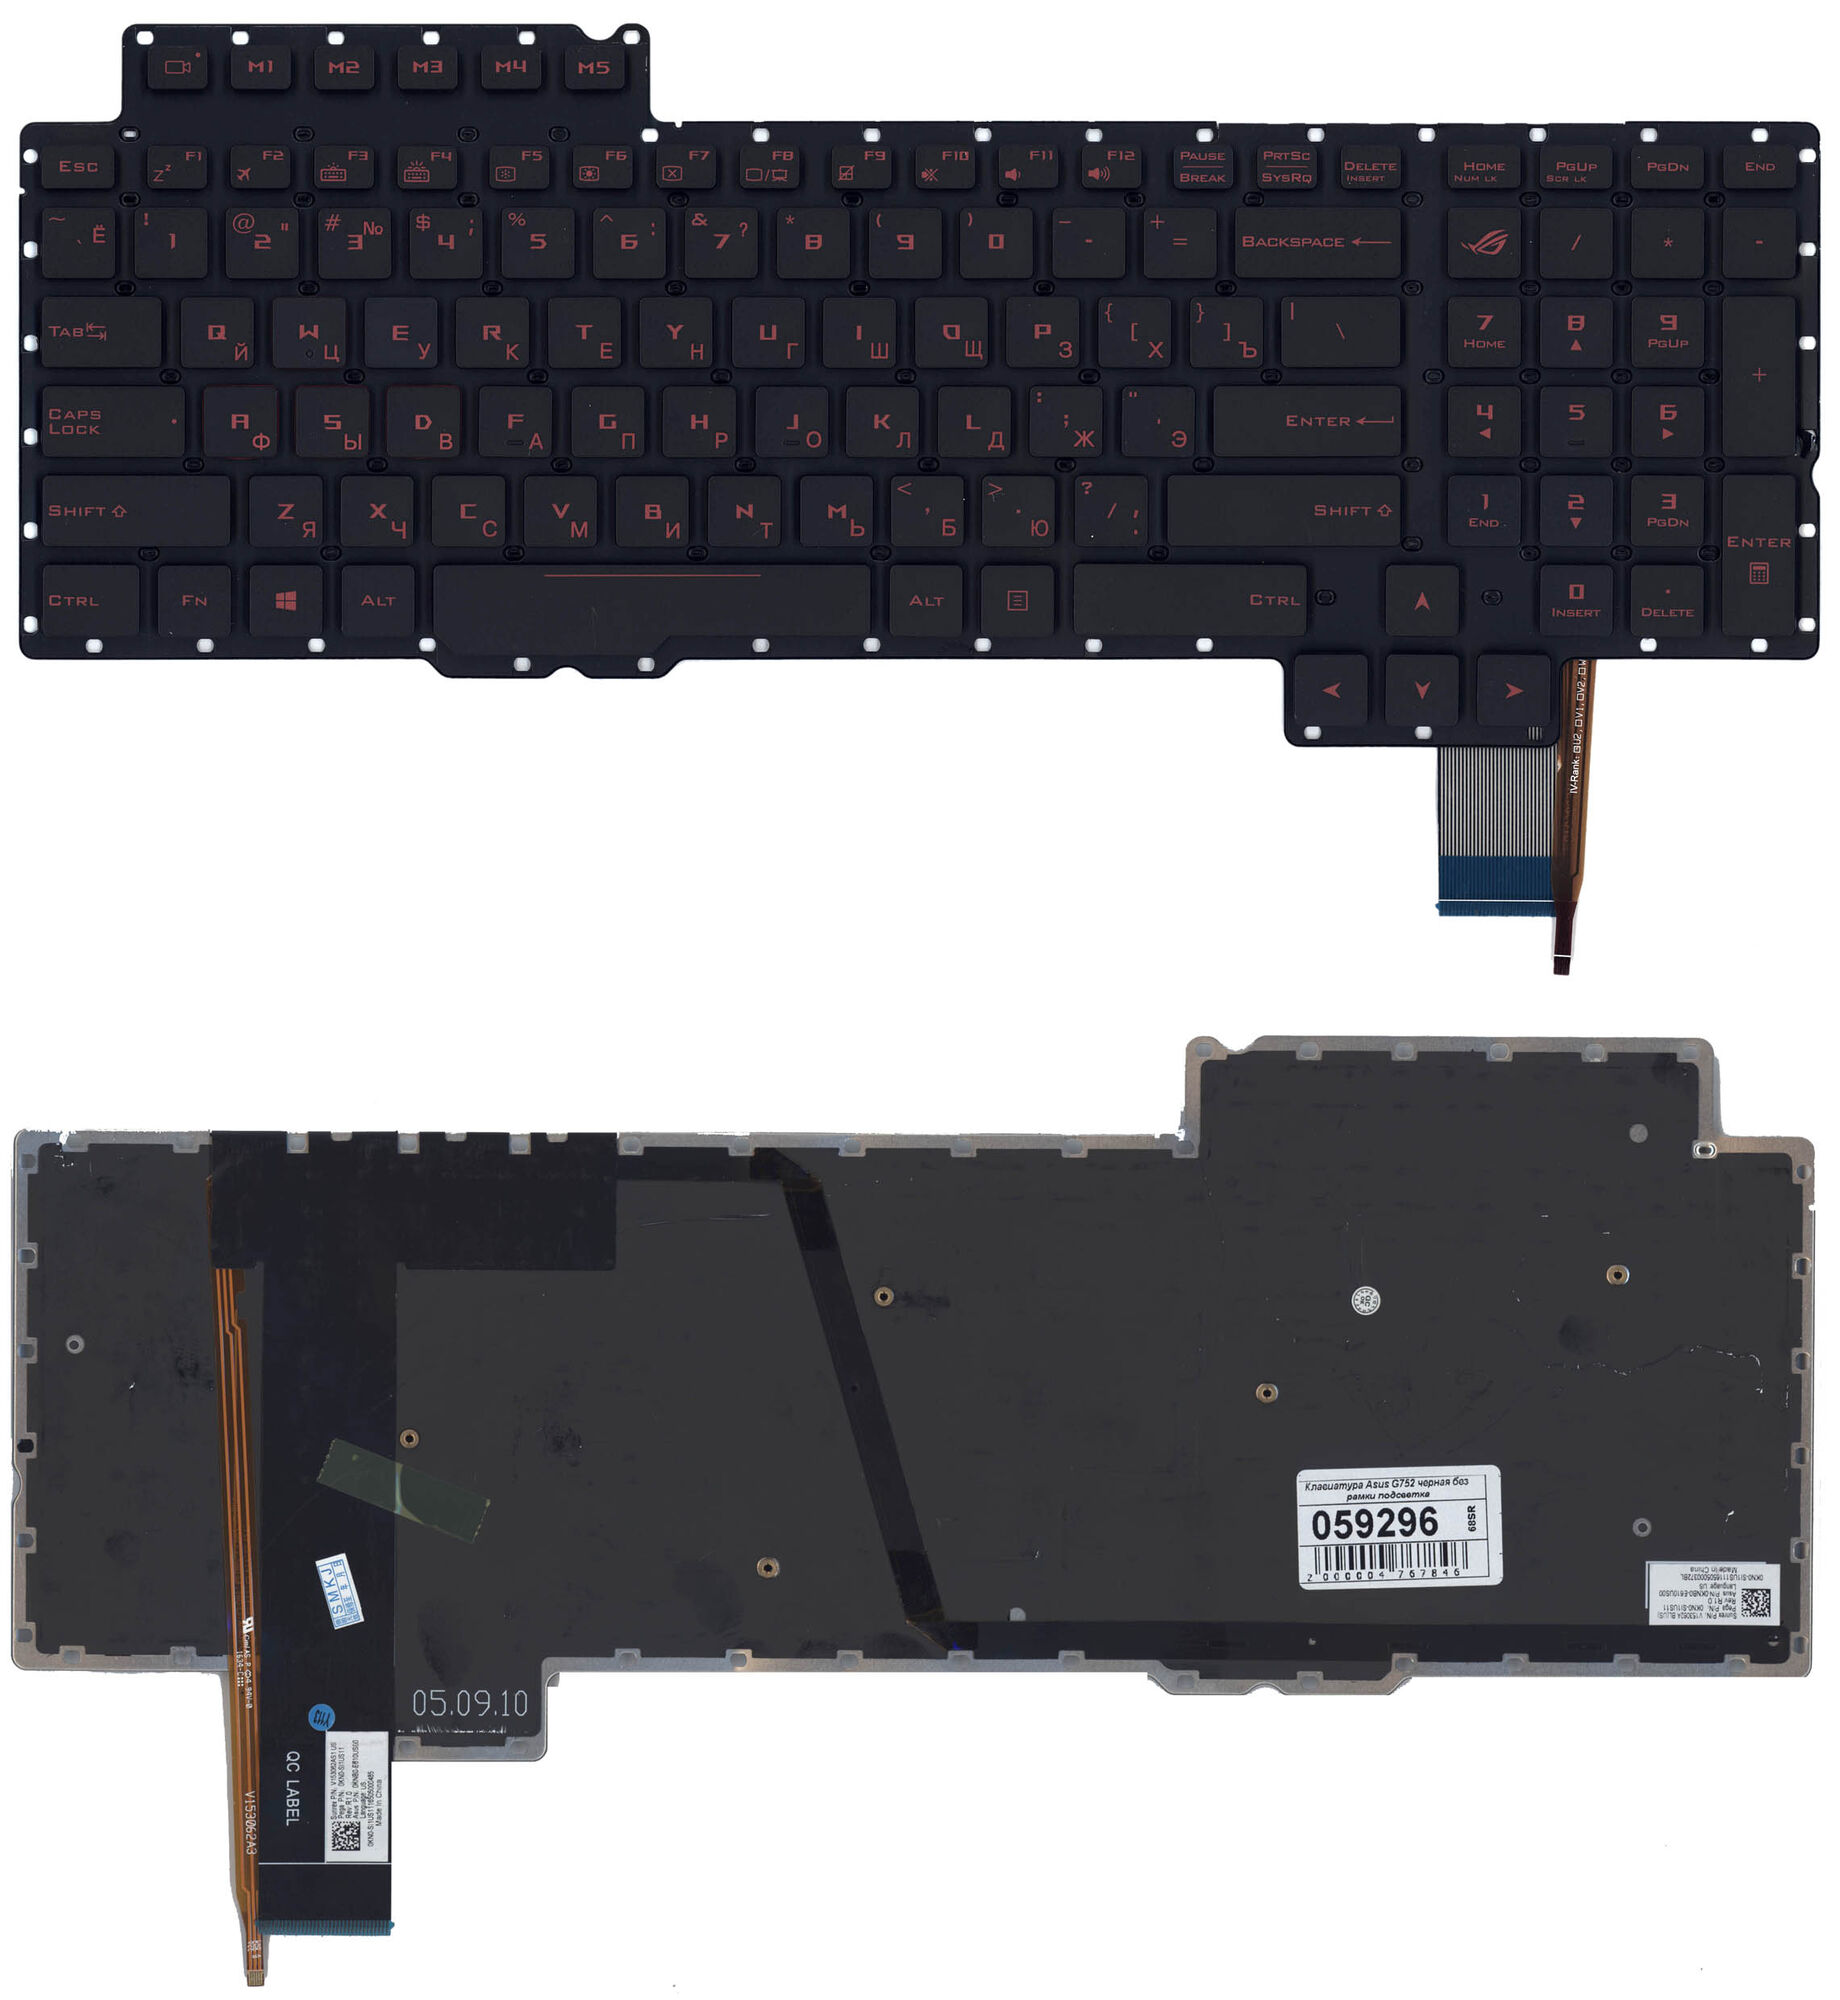 Клавиатура для ноутбука Asus ROG G752 G752VL G752VS черная без рамки, красная подсветка